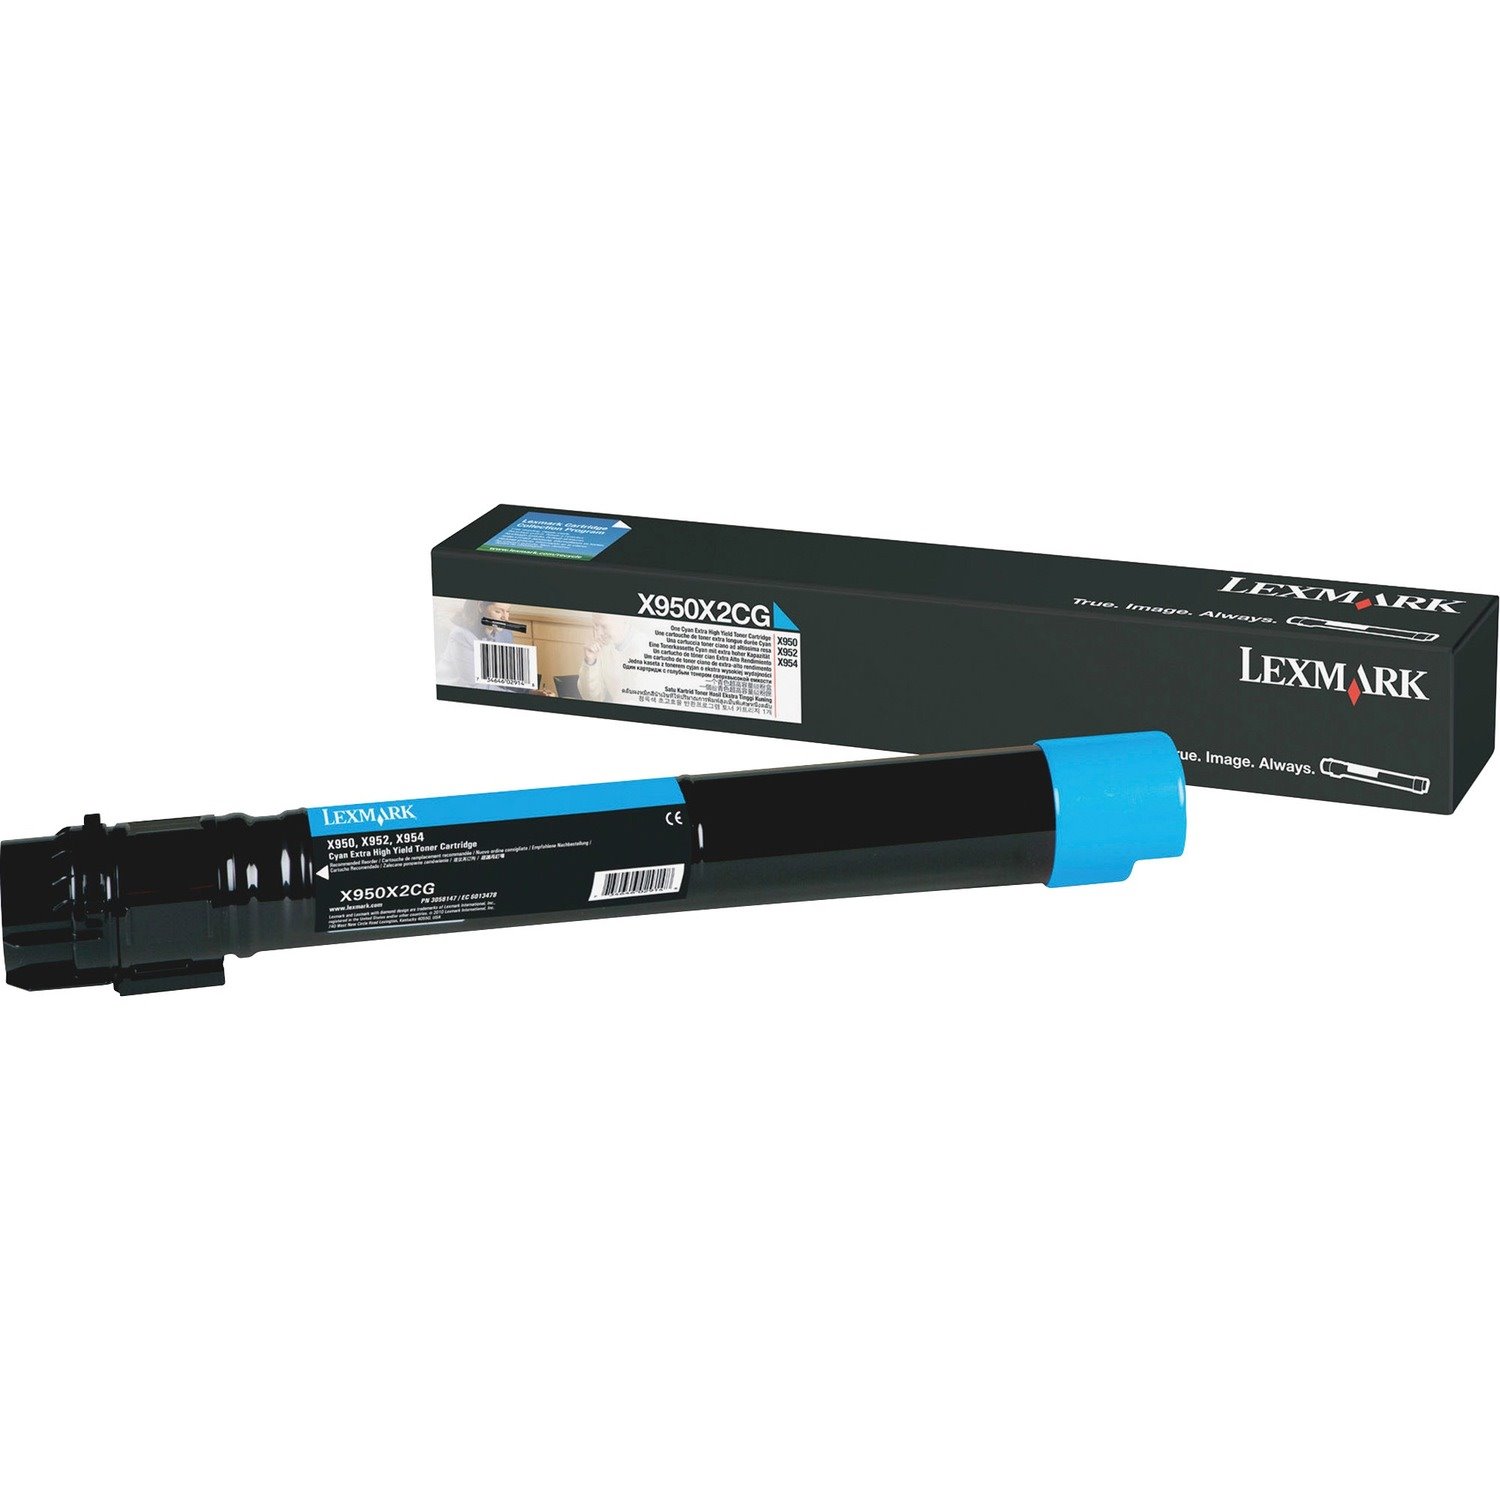 Lexmark X950X2CG Original Laser Toner Cartridge - Cyan - 1 Each